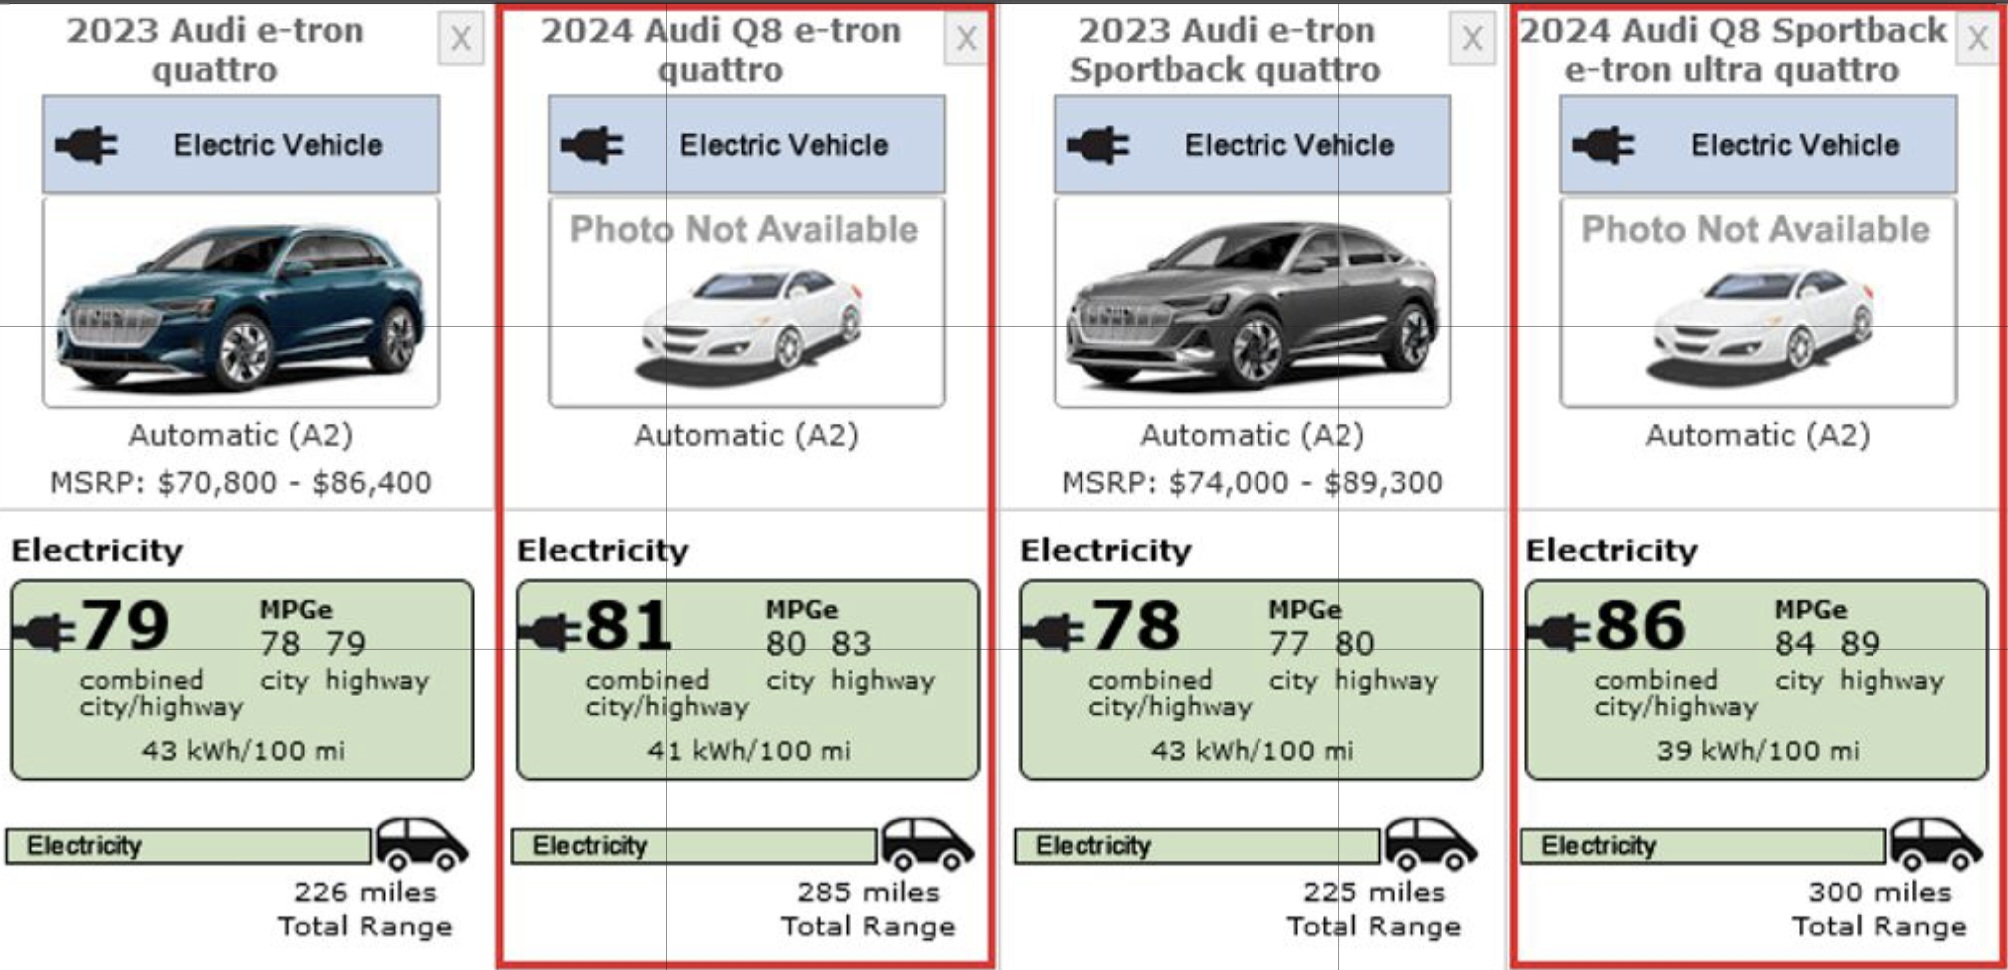 2024 Audi Q8 e-tron は EPA を大幅に改善